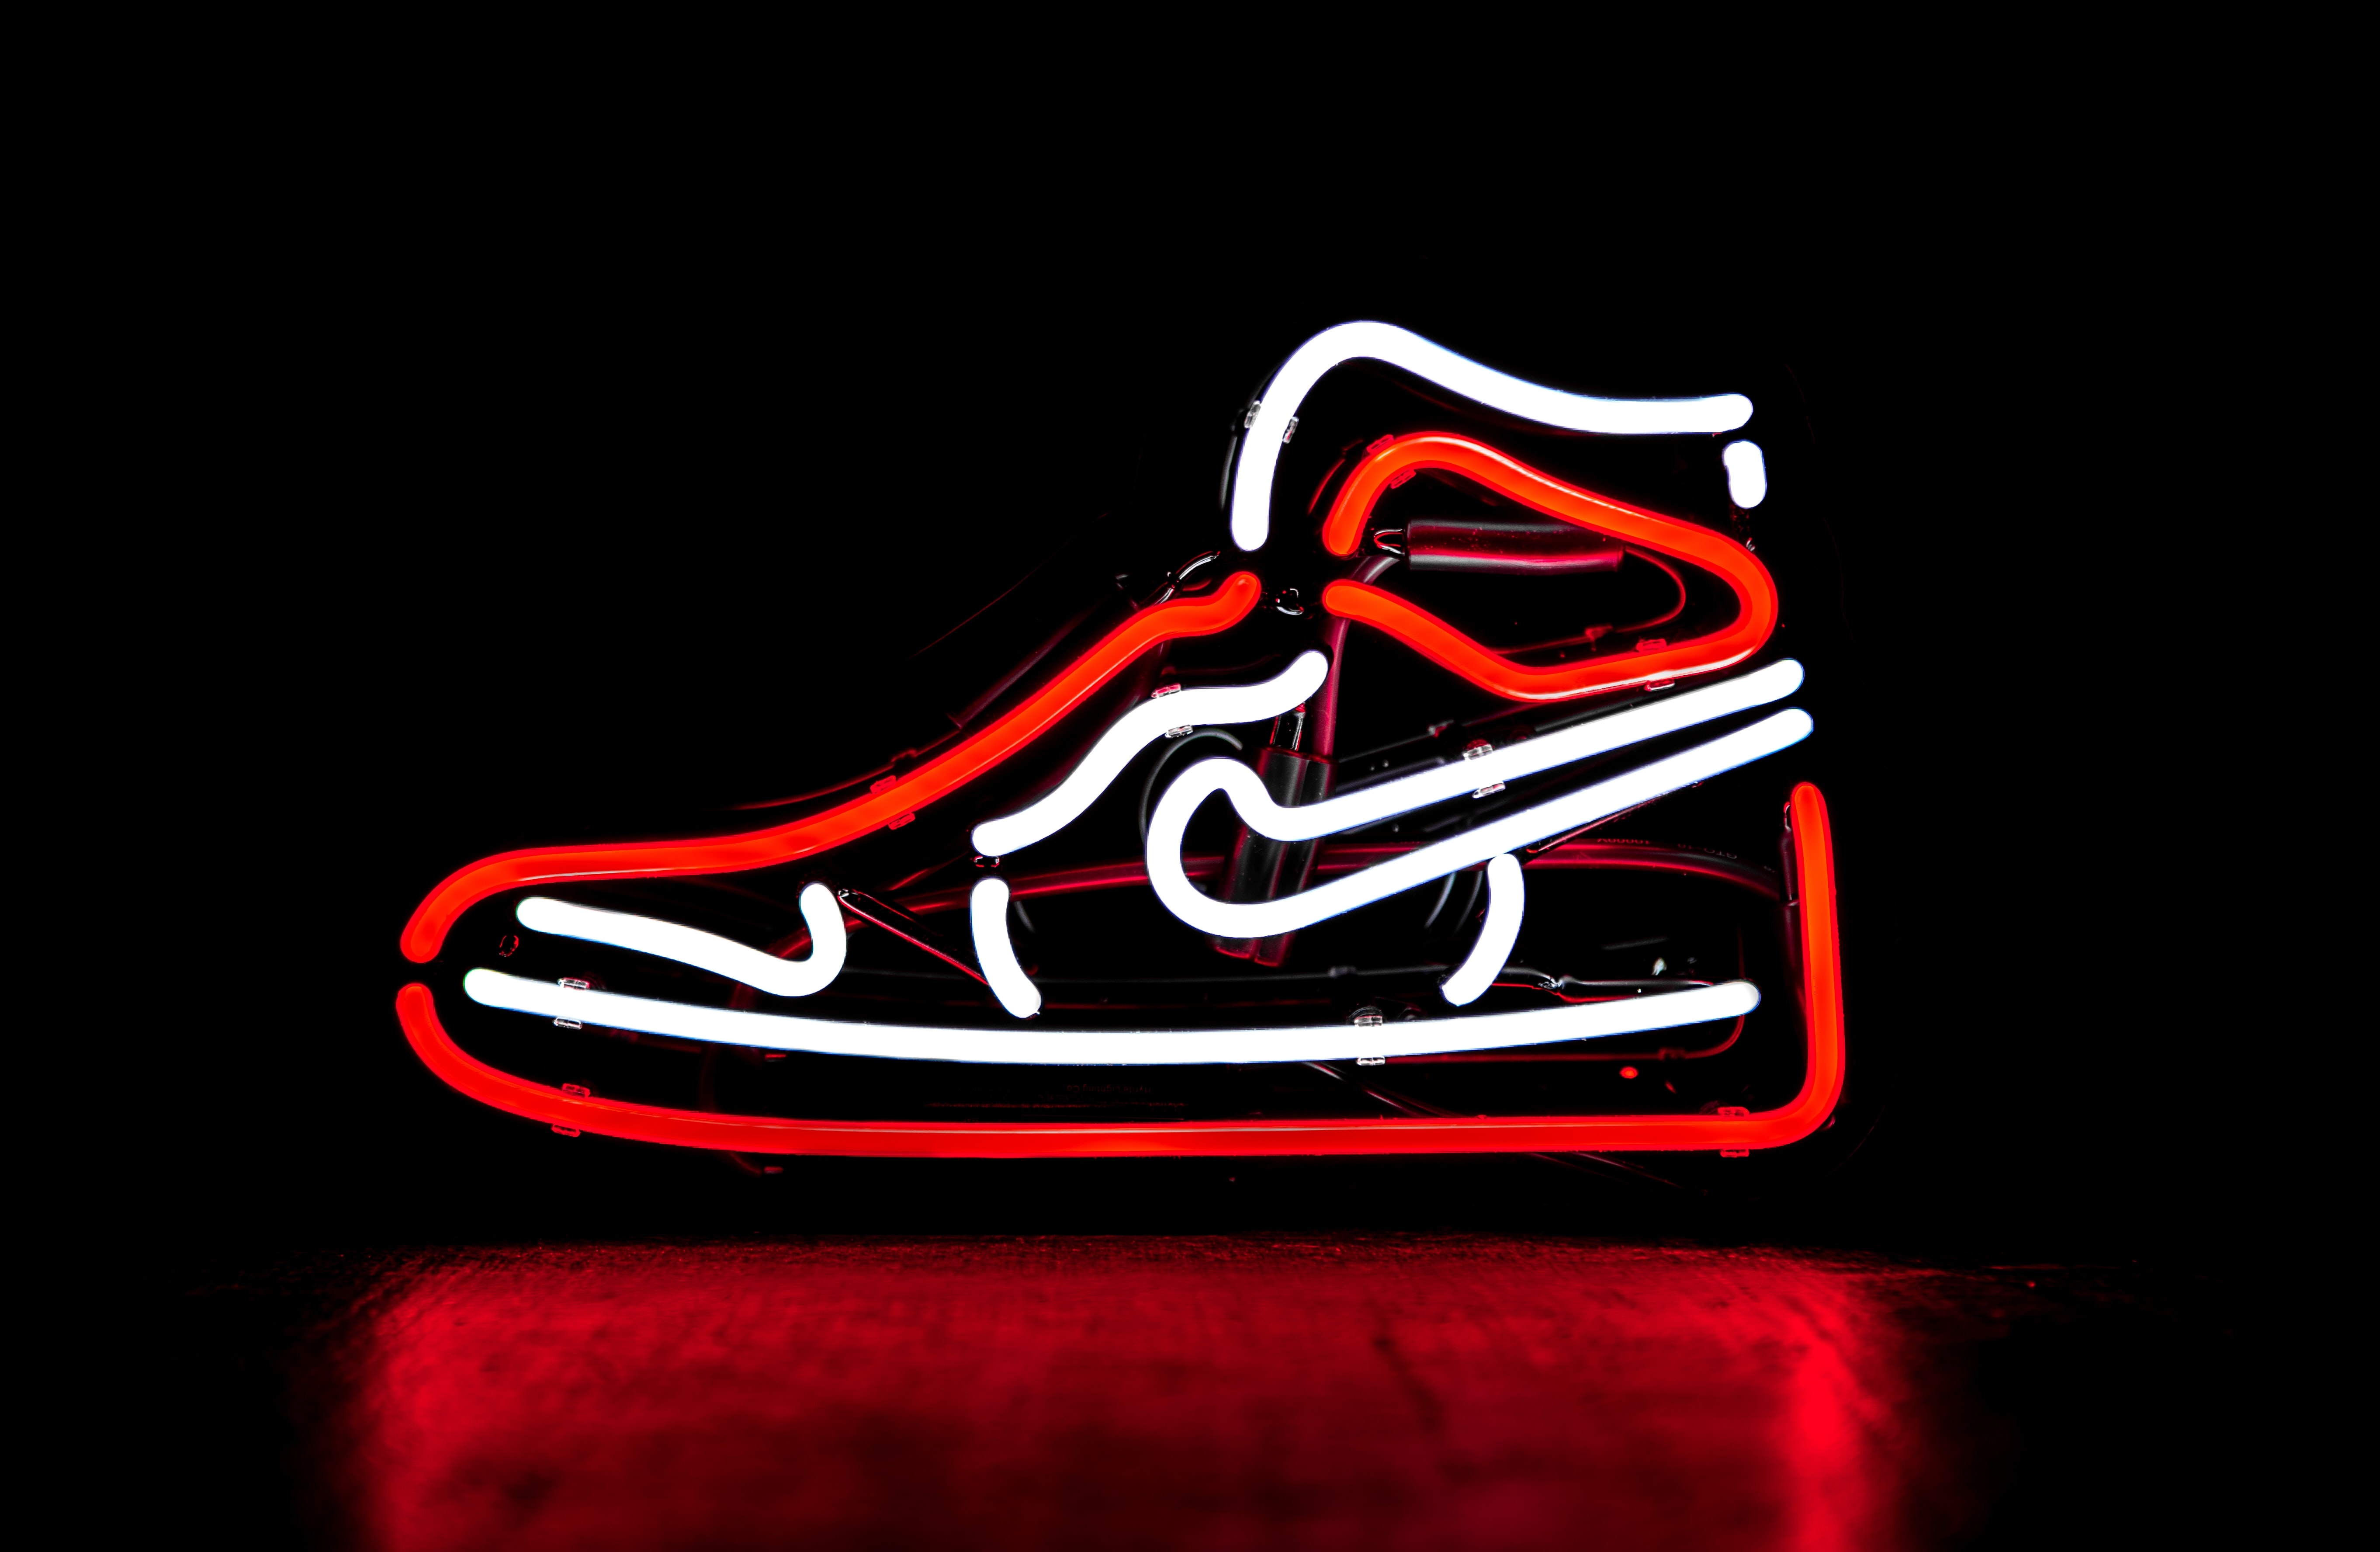 Neon Jordan Retro Shoe Wallpaper, HD Artist 4K Wallpapers, Images